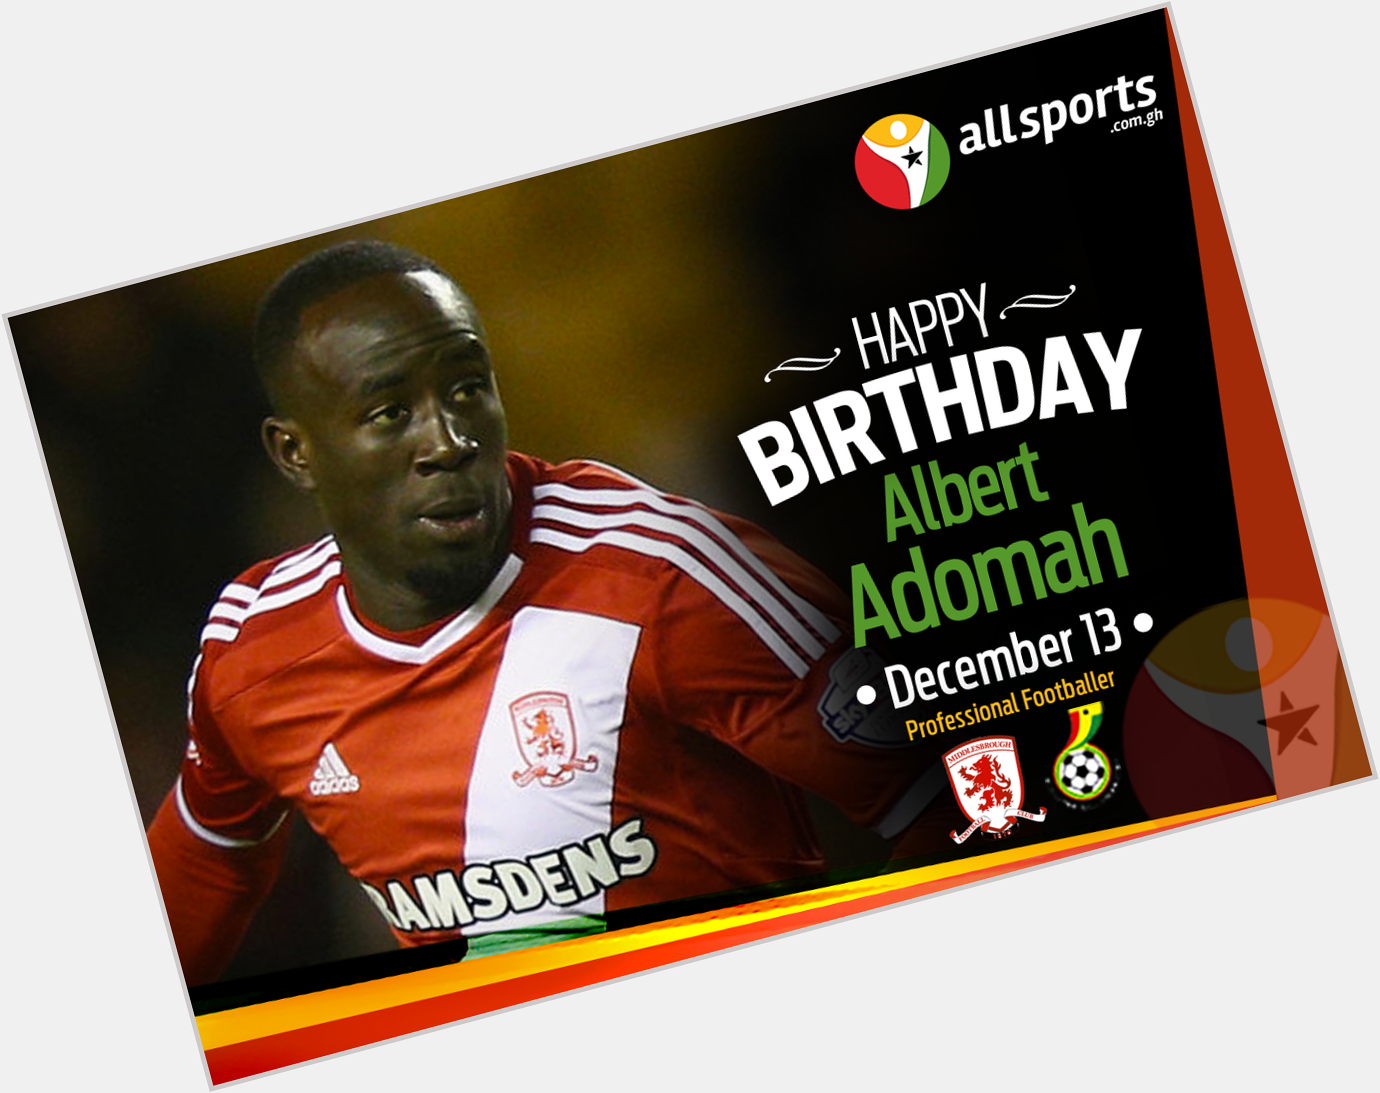 AllSportGh wishes & midfielder ALBEADOMAH,A Happy 28th Birthday!  